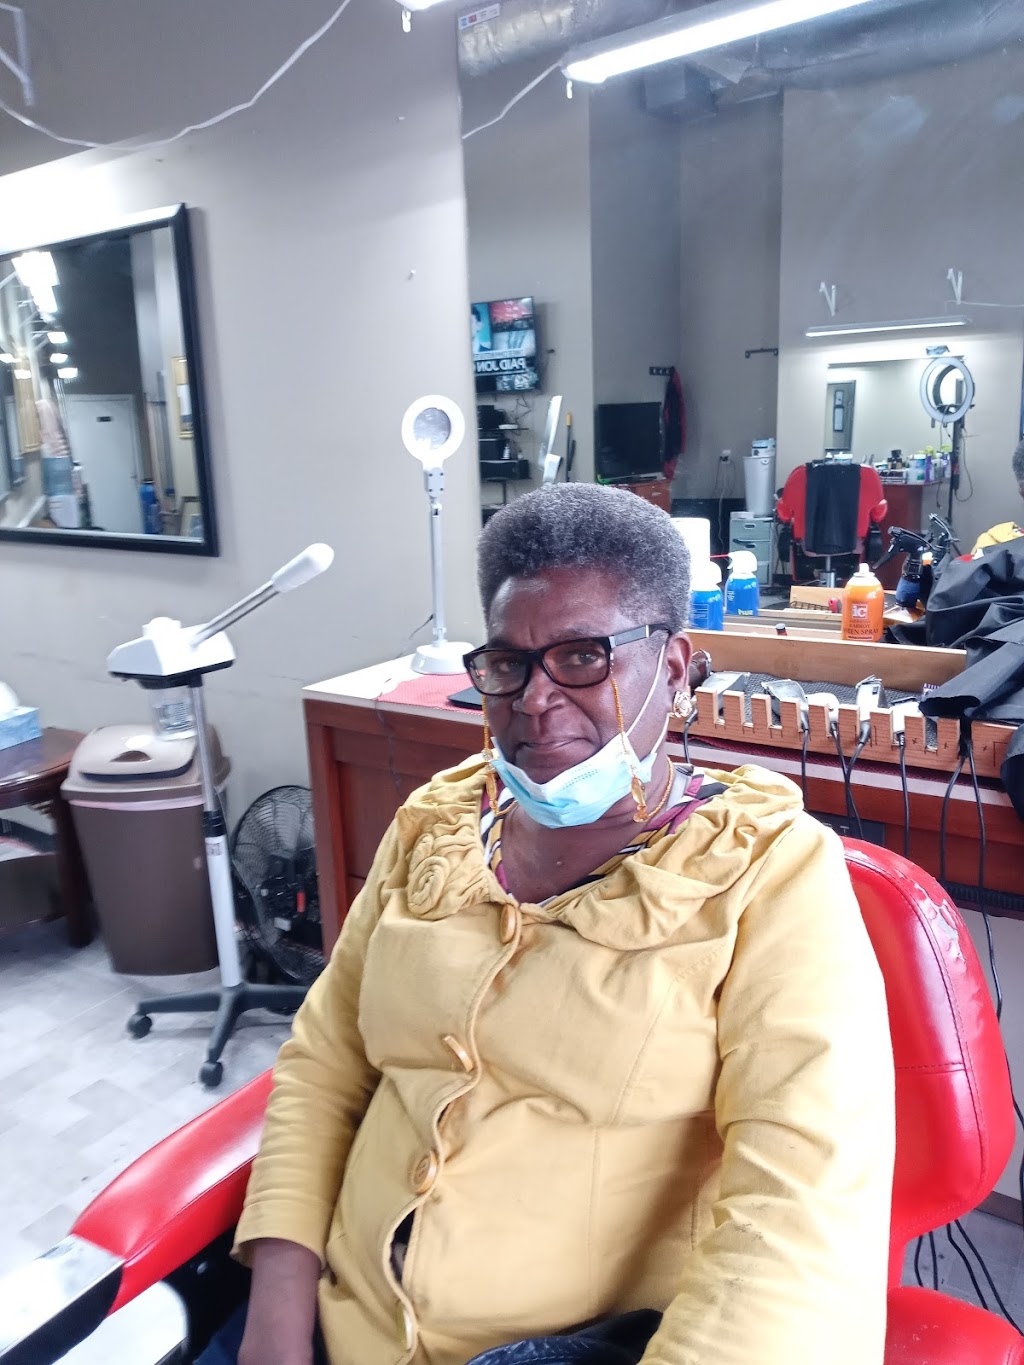 The original barbershop | 2625 Shallowford Rd, Atlanta, GA 30345, USA | Phone: (678) 964-1251